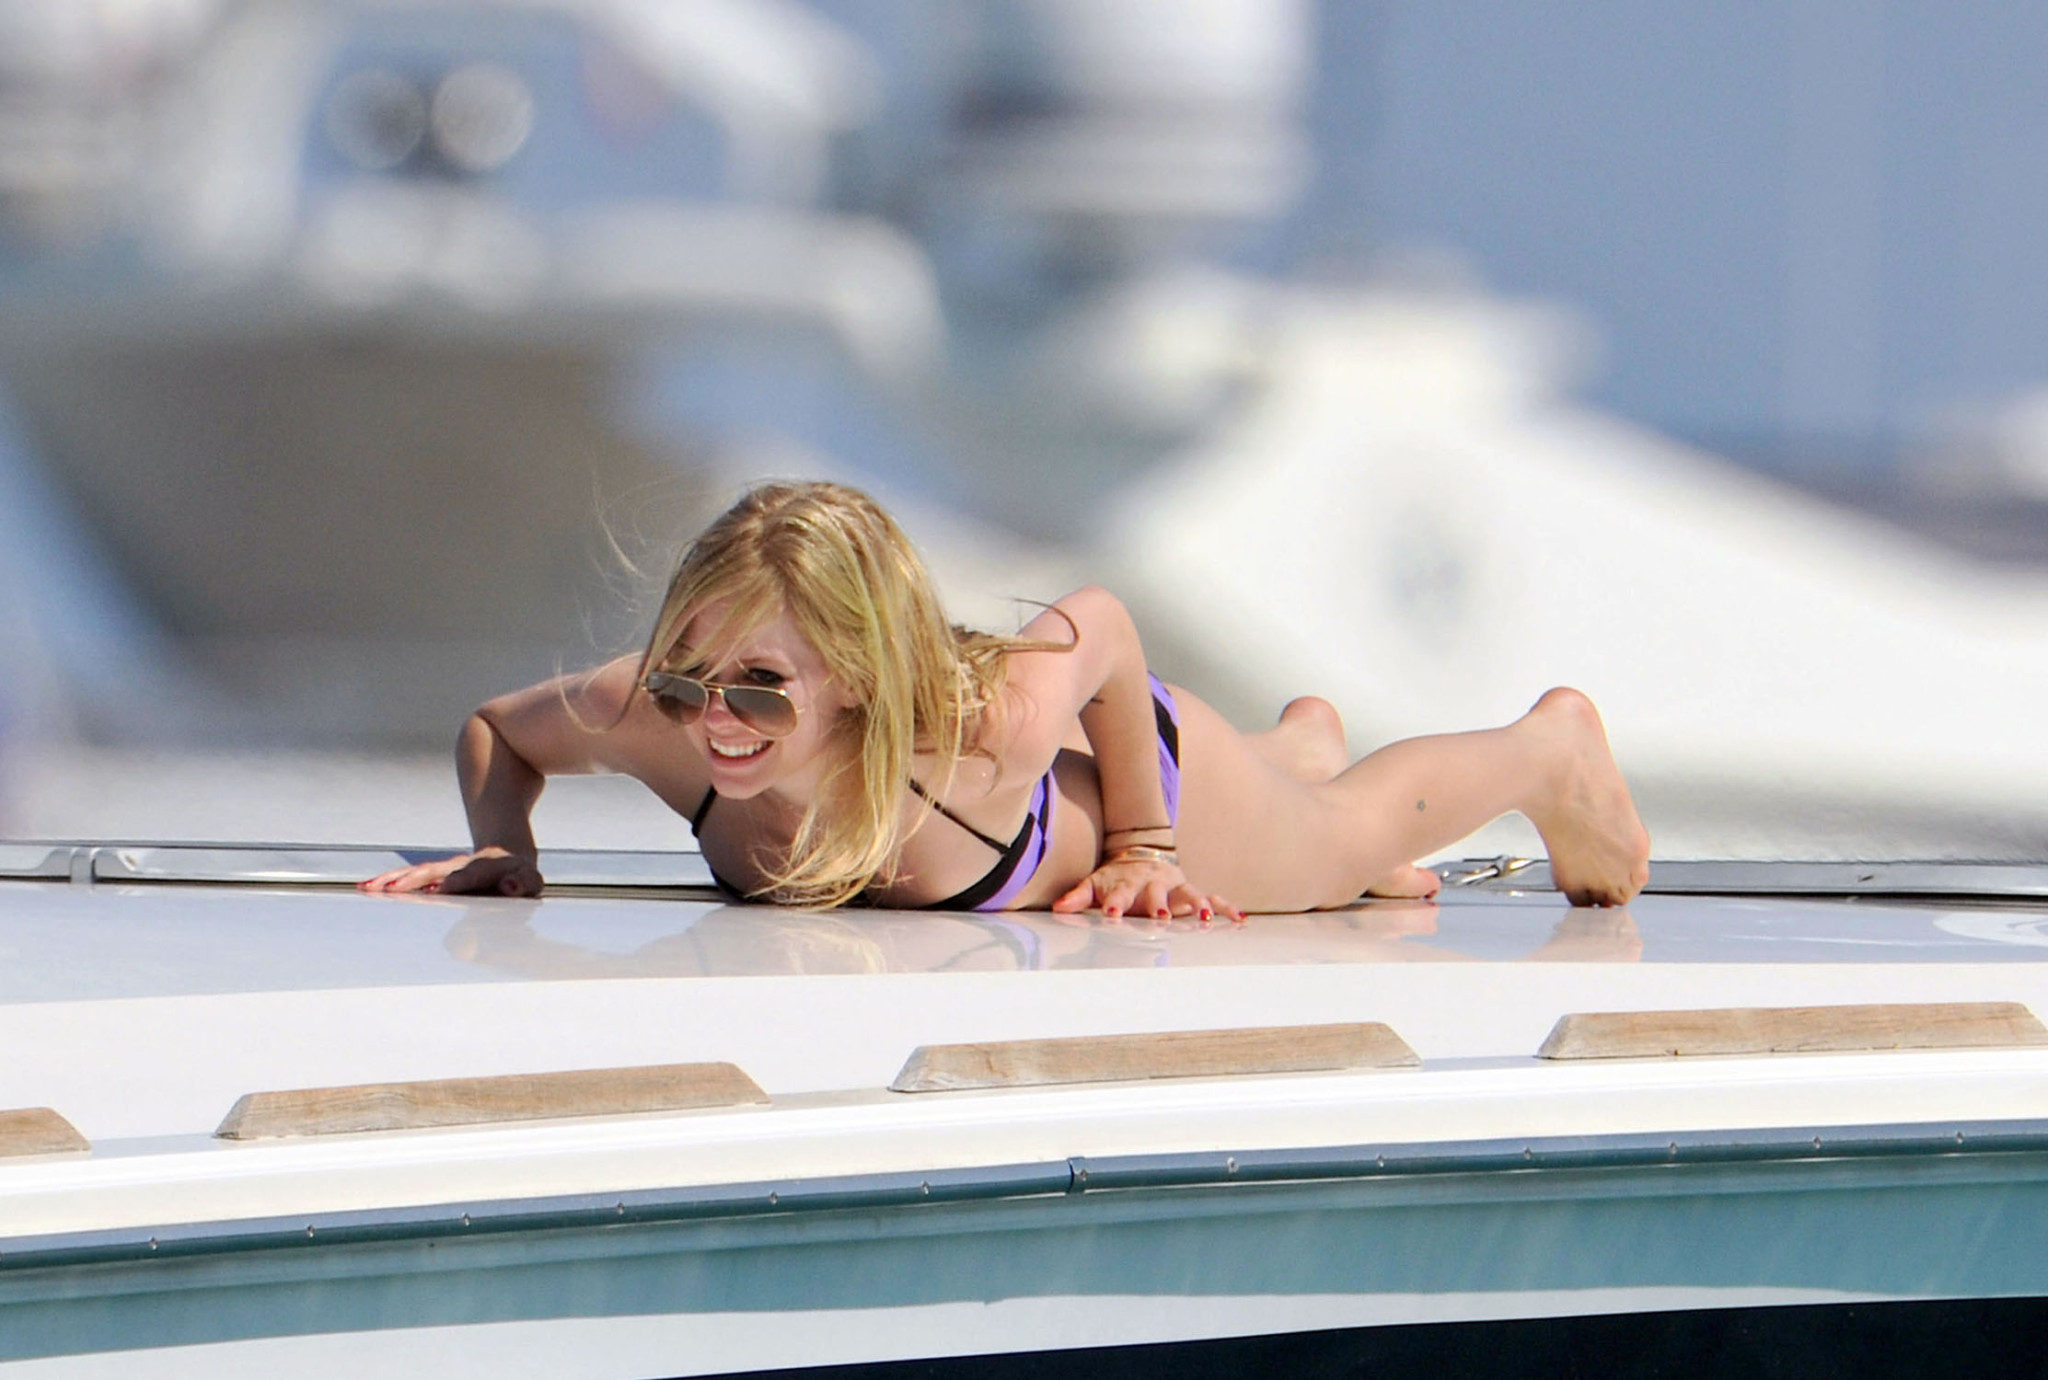 Avril Lavigne showing off her bikini body on a yacht in Saint Tropez